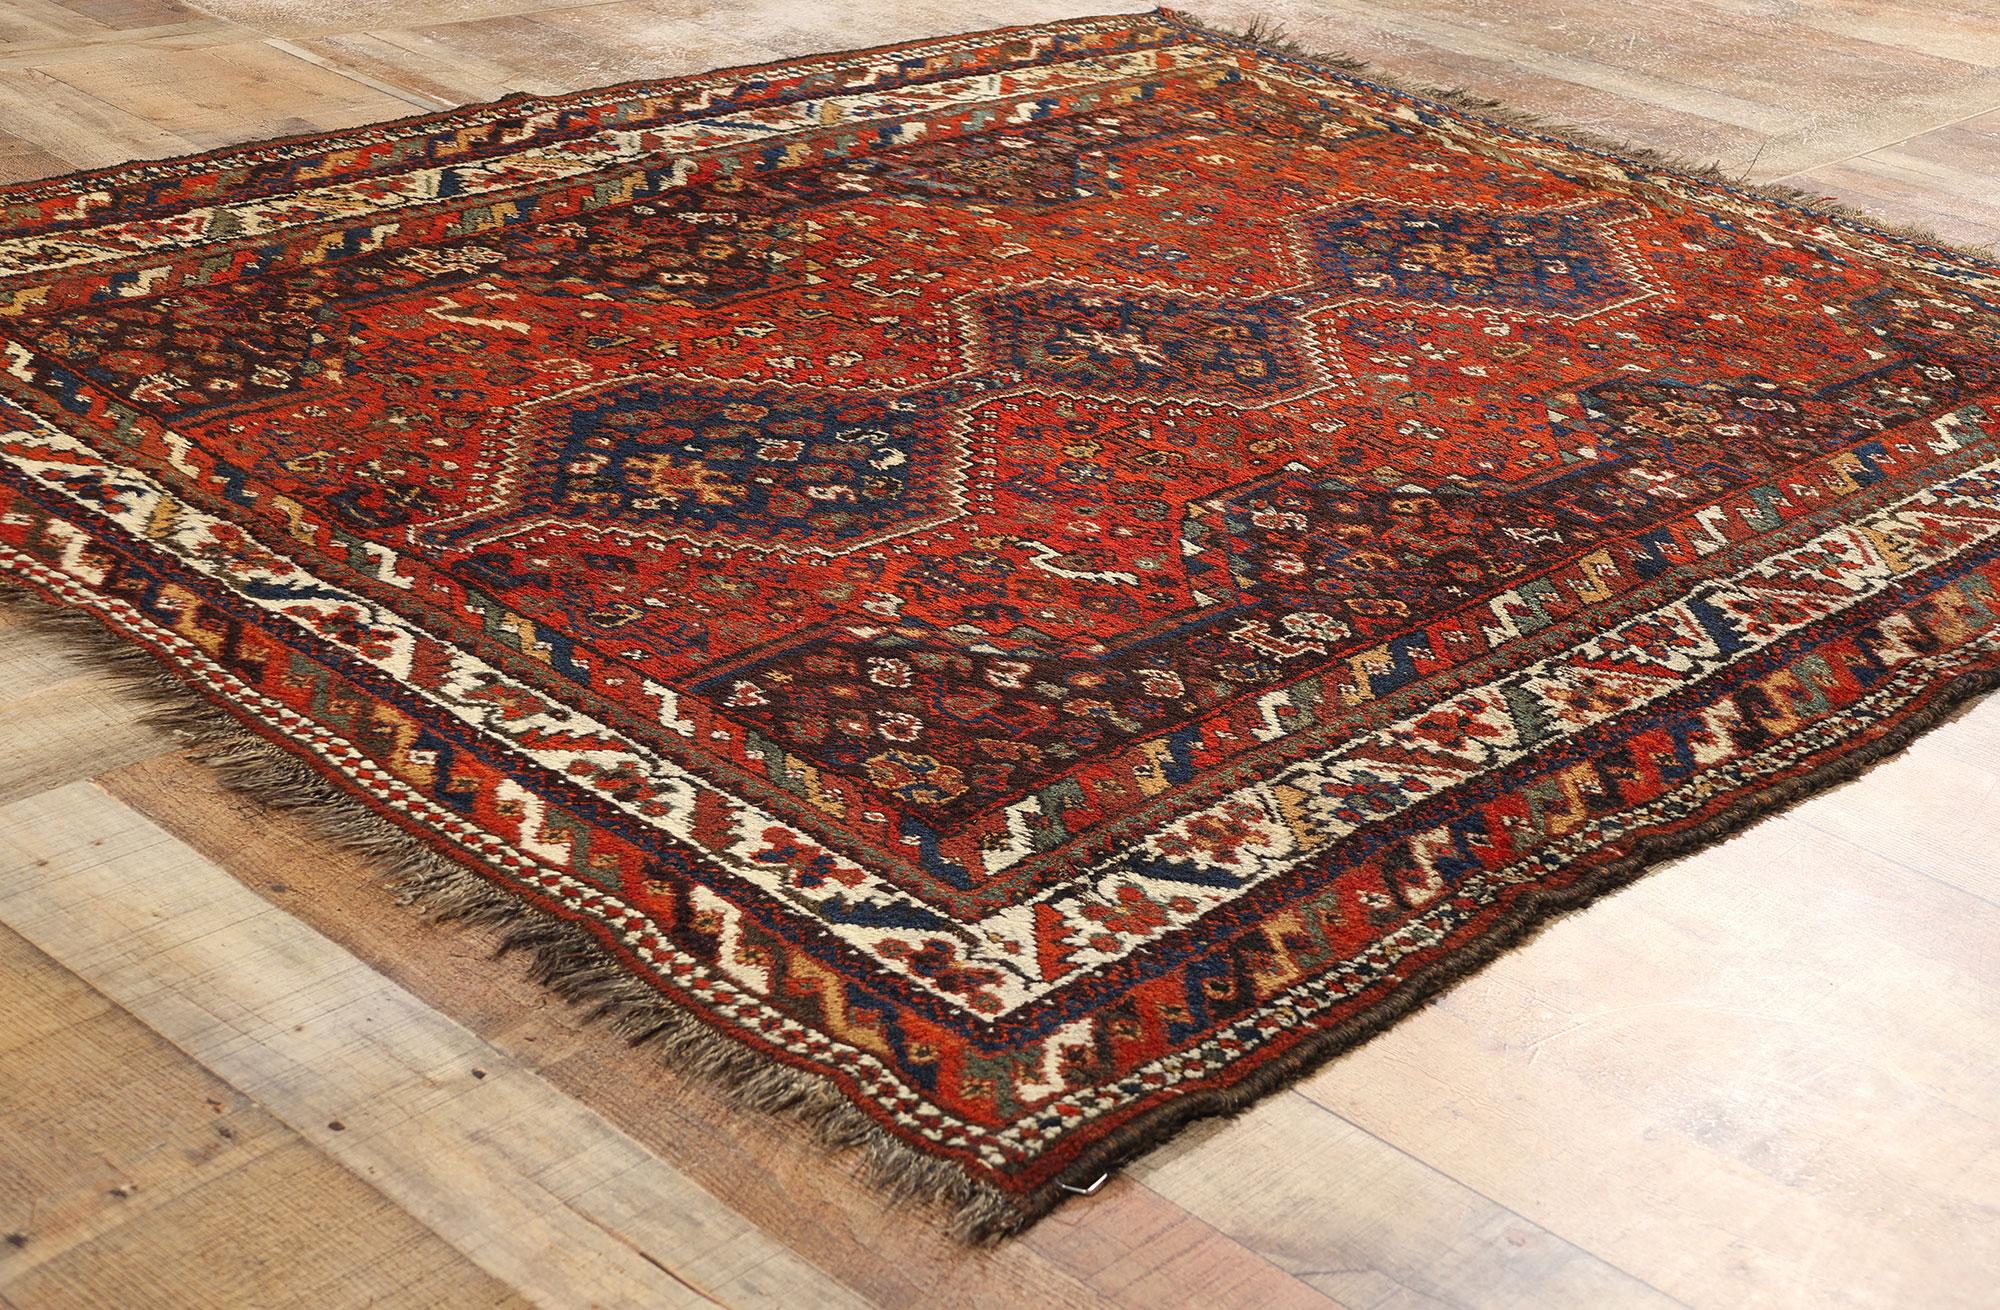 Late 19th Century Antique Persian Shiraz Carpet For Sale 1